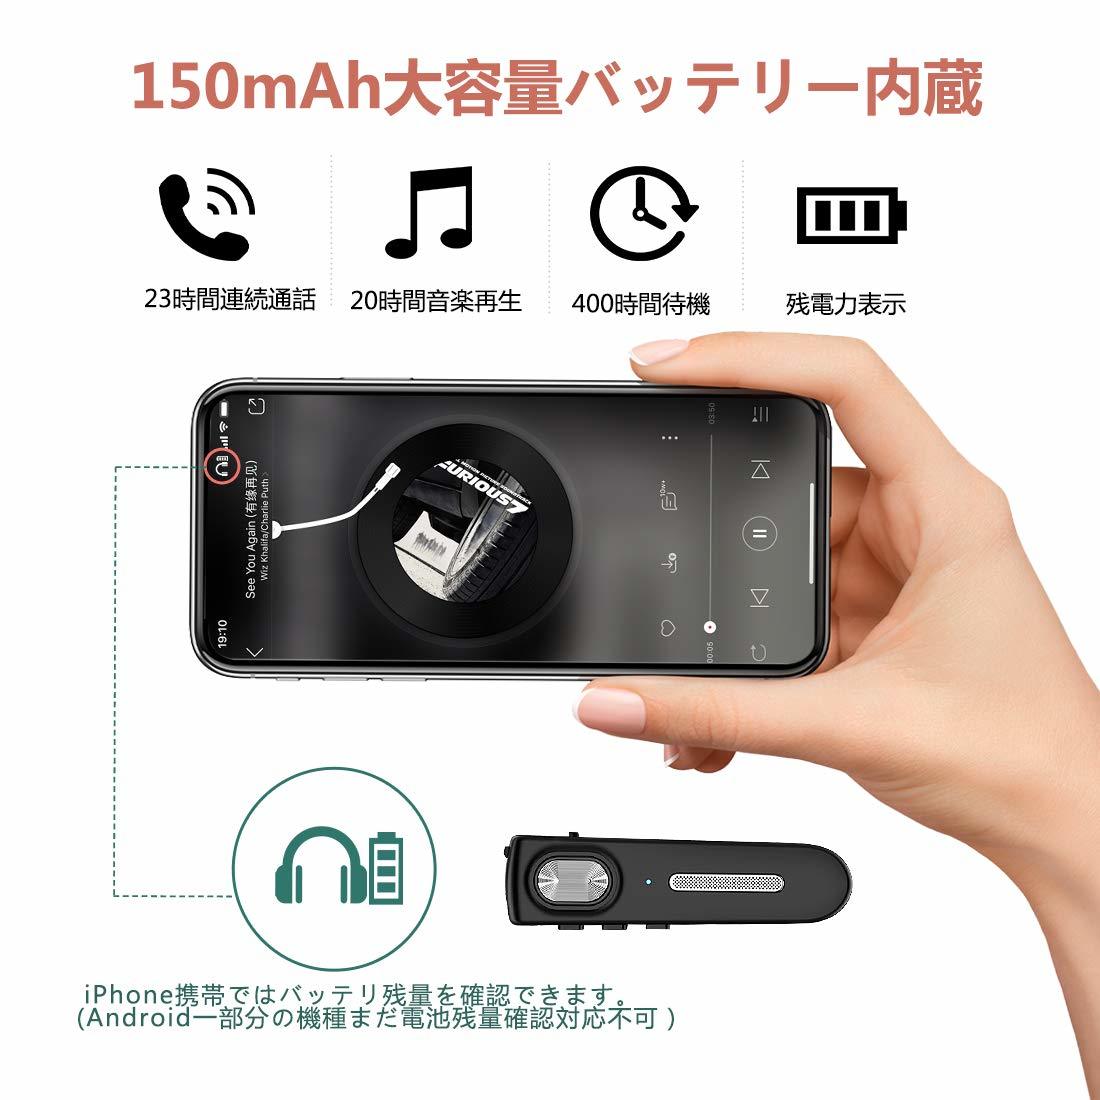 Bluetooth ヘッドセット 5.0 日本語音声 ワイヤレス 片耳 マイク内蔵 日本技適マーク取得 150mAhバッテリー 22時間連続再生 軽量 Siri機能_画像4